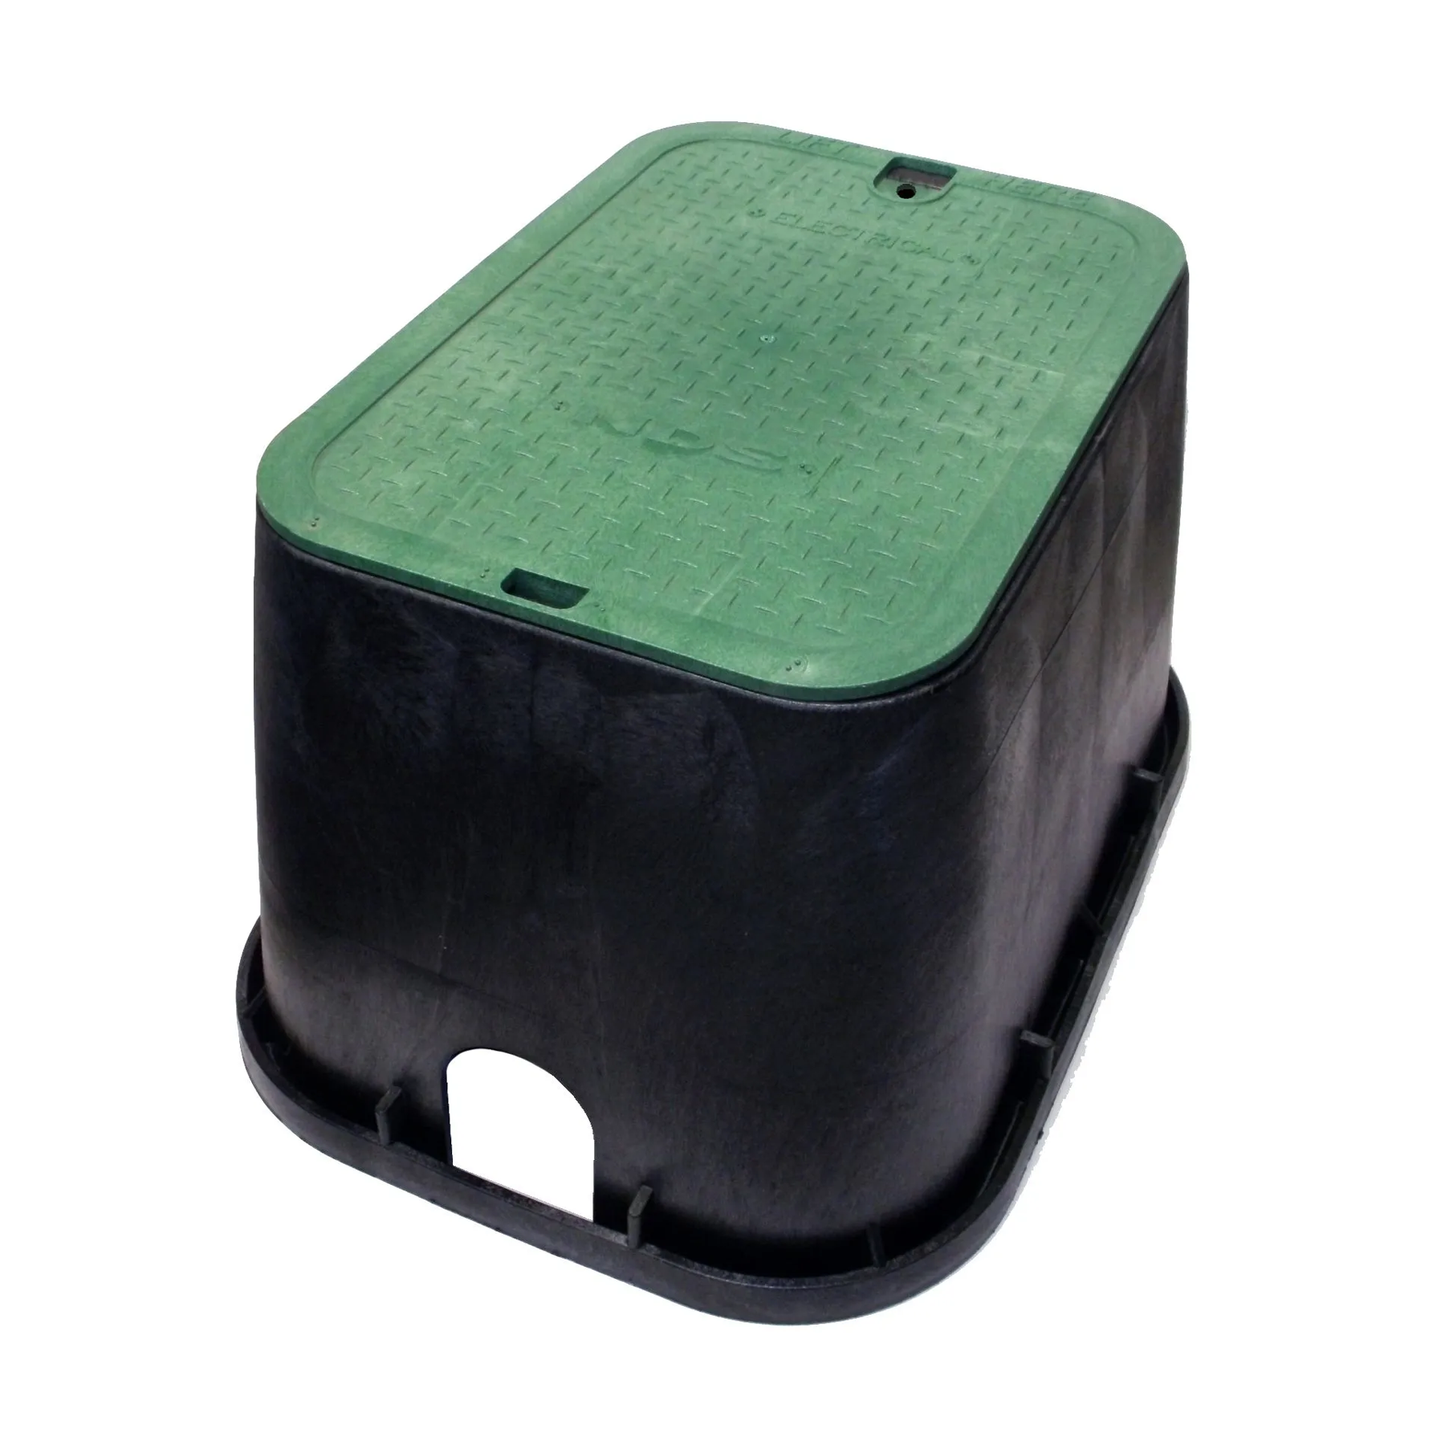 NDS 113BC - 14" x 19" Standard Series Valve Box, Black Box / Green Cover